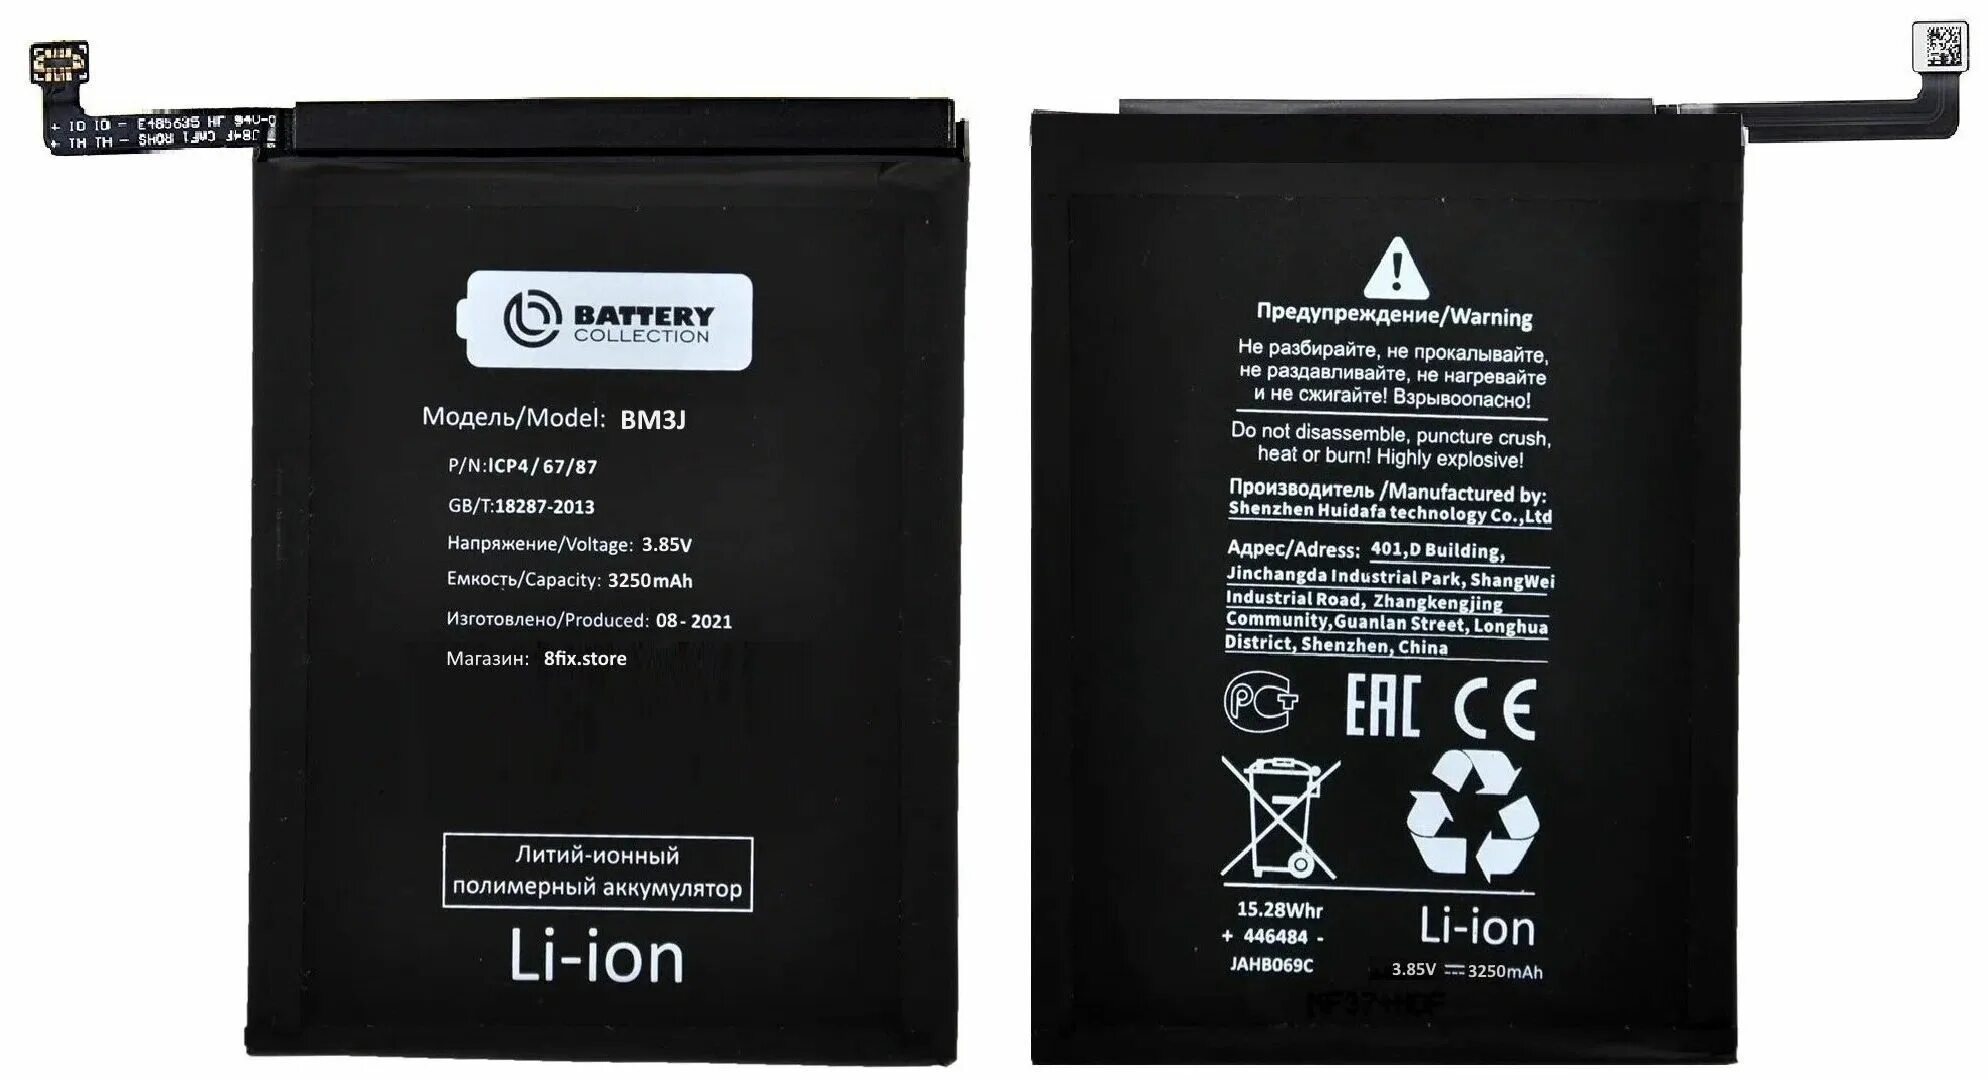 АКБ для Xiaomi bm3j ( mi 8 Lite ) - Battery collection (премиум). Mi 8 Lite батарея. Аккумулятор для Xiaomi 8 Lite (bm3j) (Premium). Mi 11 Lite Battery model. Battery collection